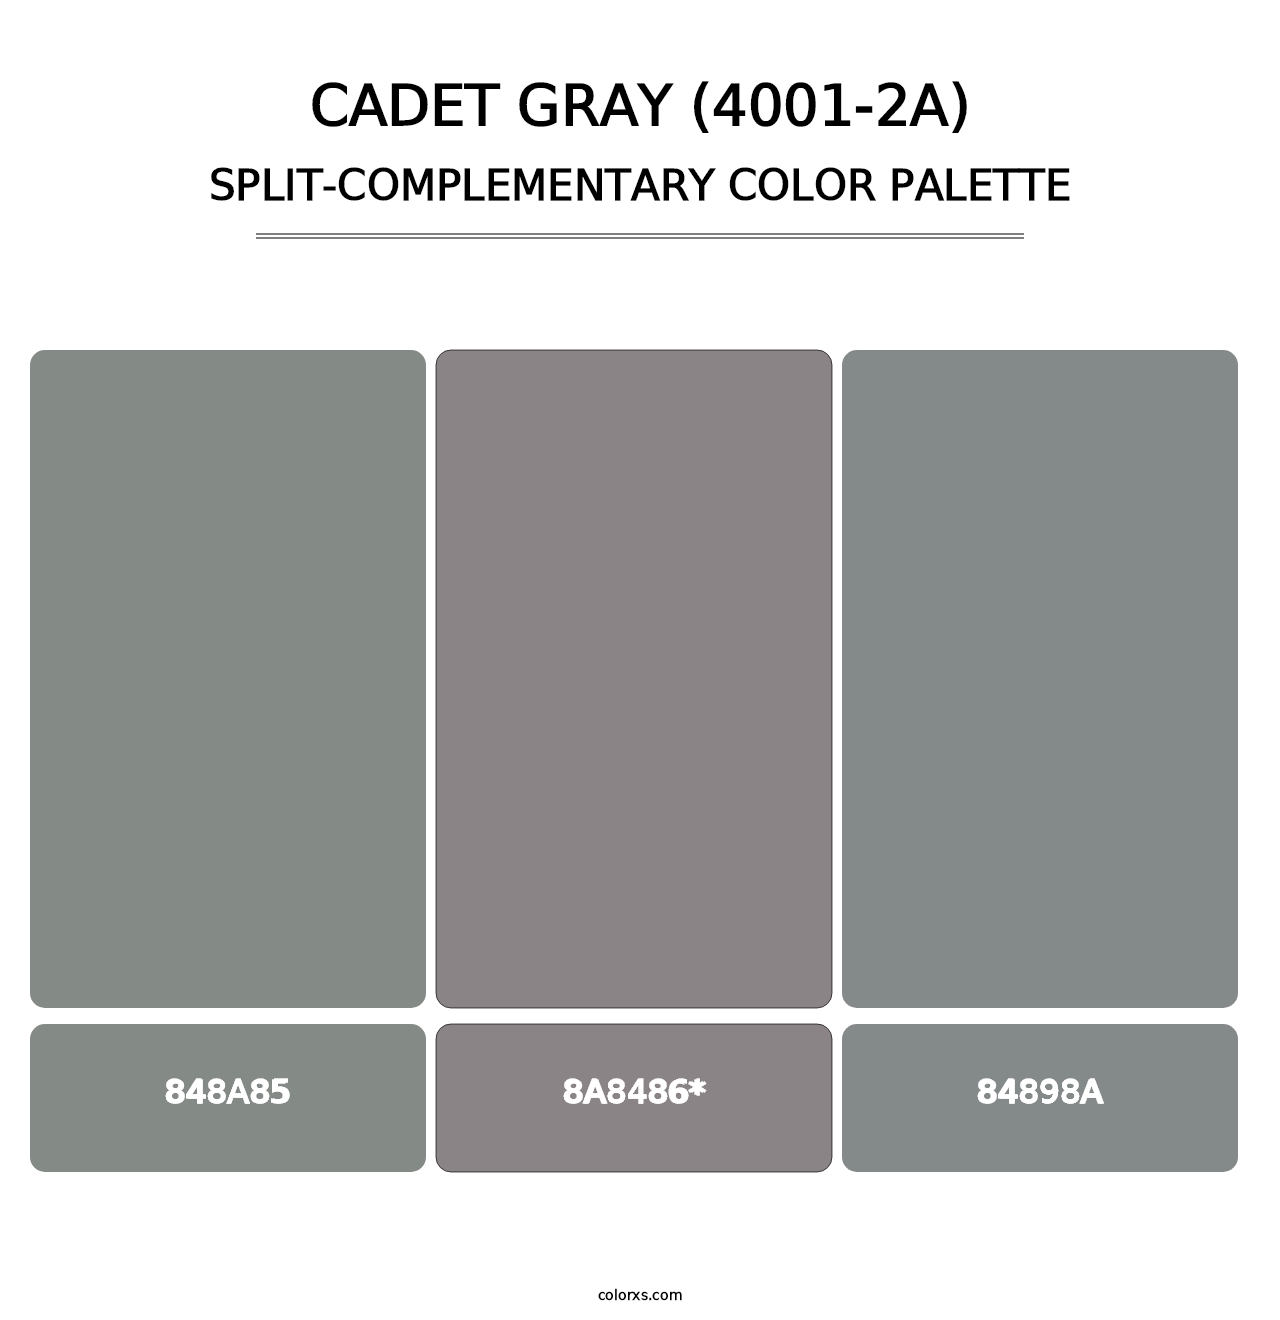 Cadet Gray (4001-2A) - Split-Complementary Color Palette